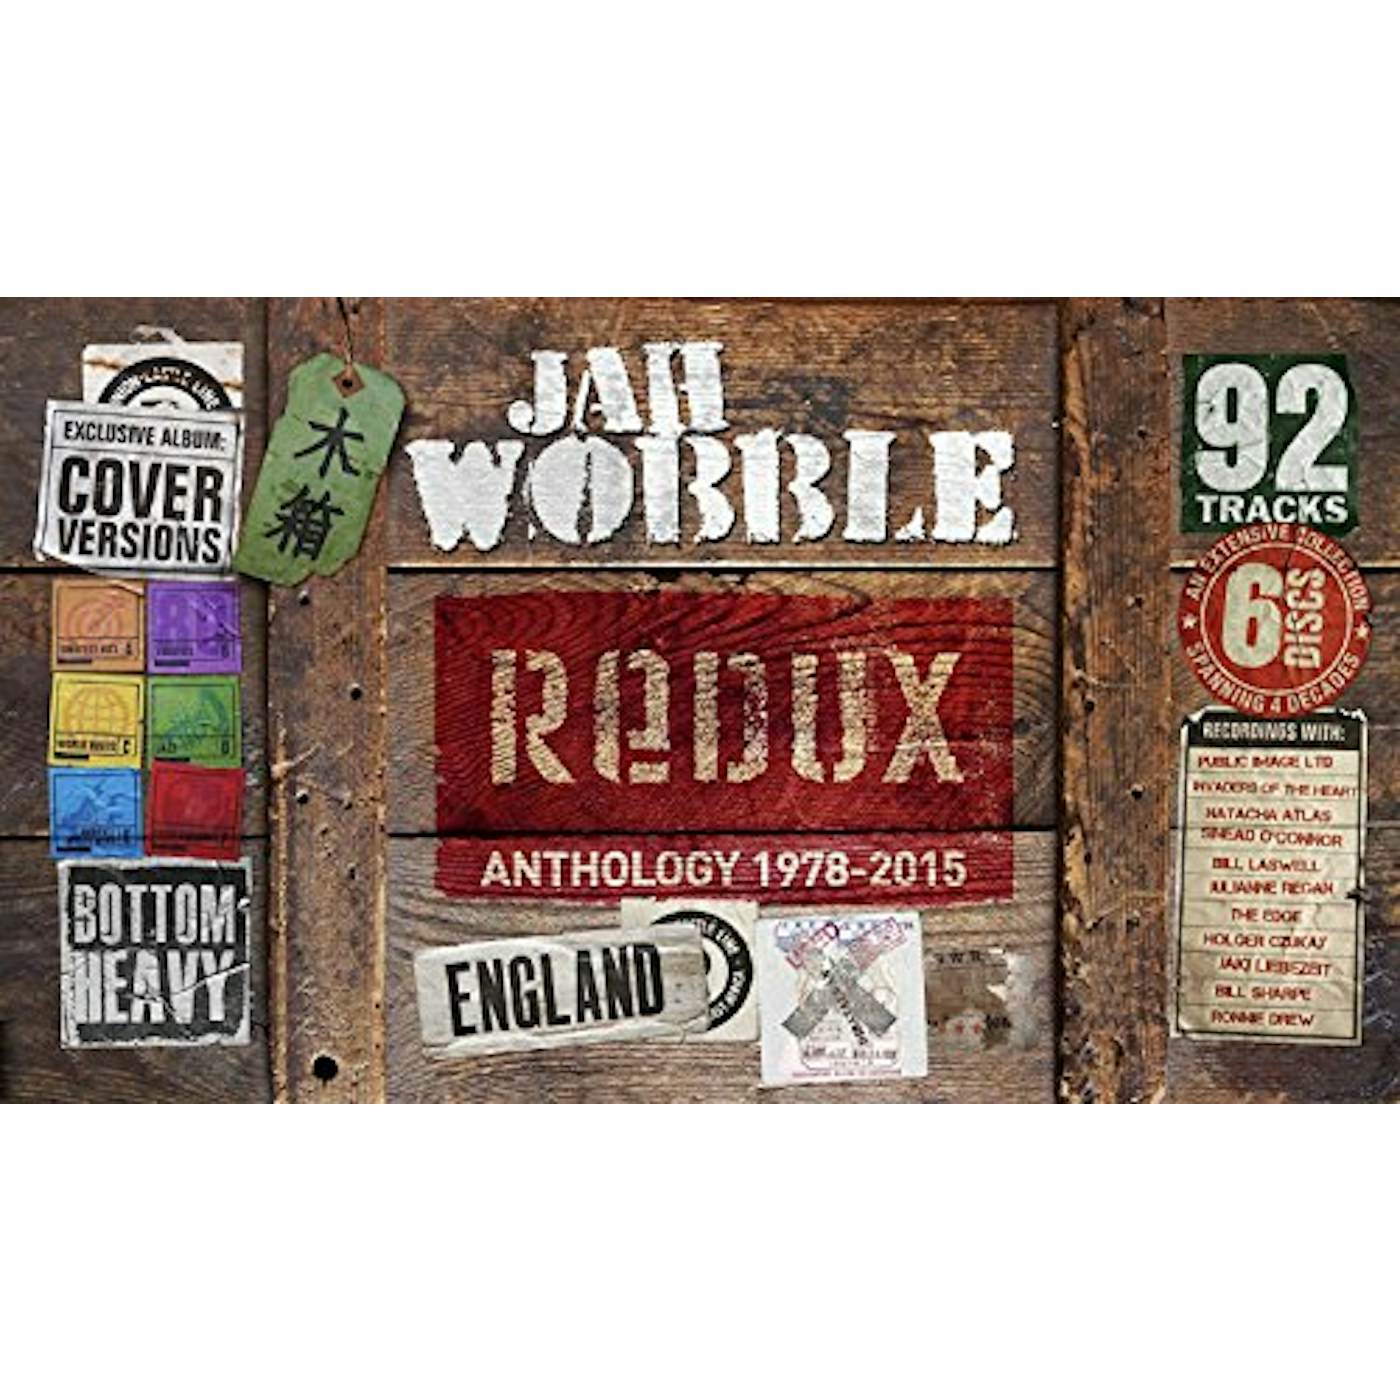 Jah Wobble REDUX: ANTHOLOGY 1978-15 CD